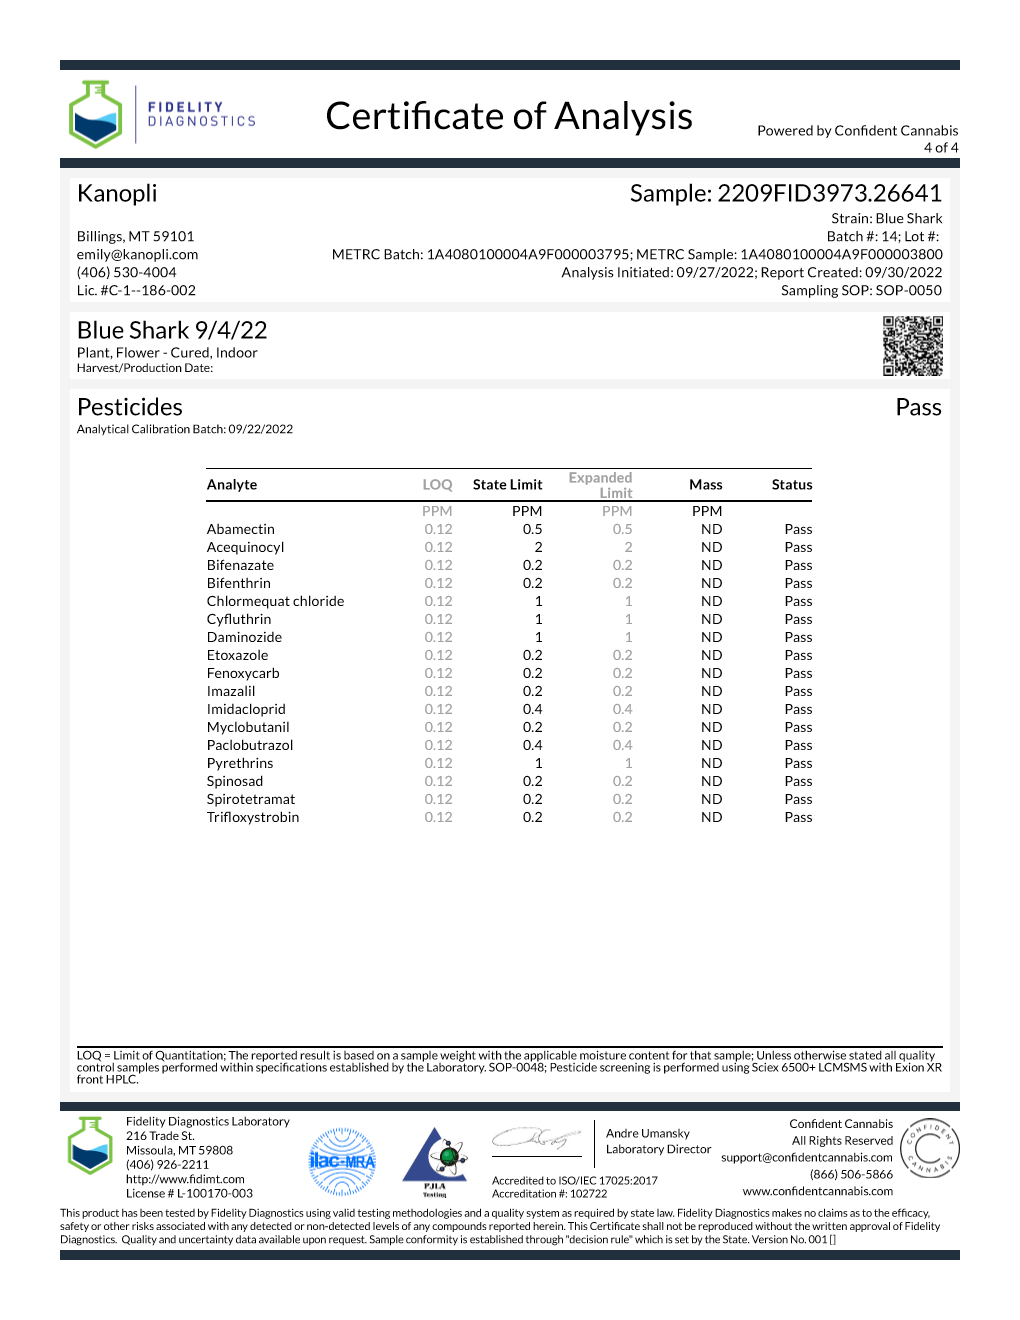 1 oz. Blue Shark - Hybrid high CBD shake (9% CBD) Sept. 2022 (28 grams)